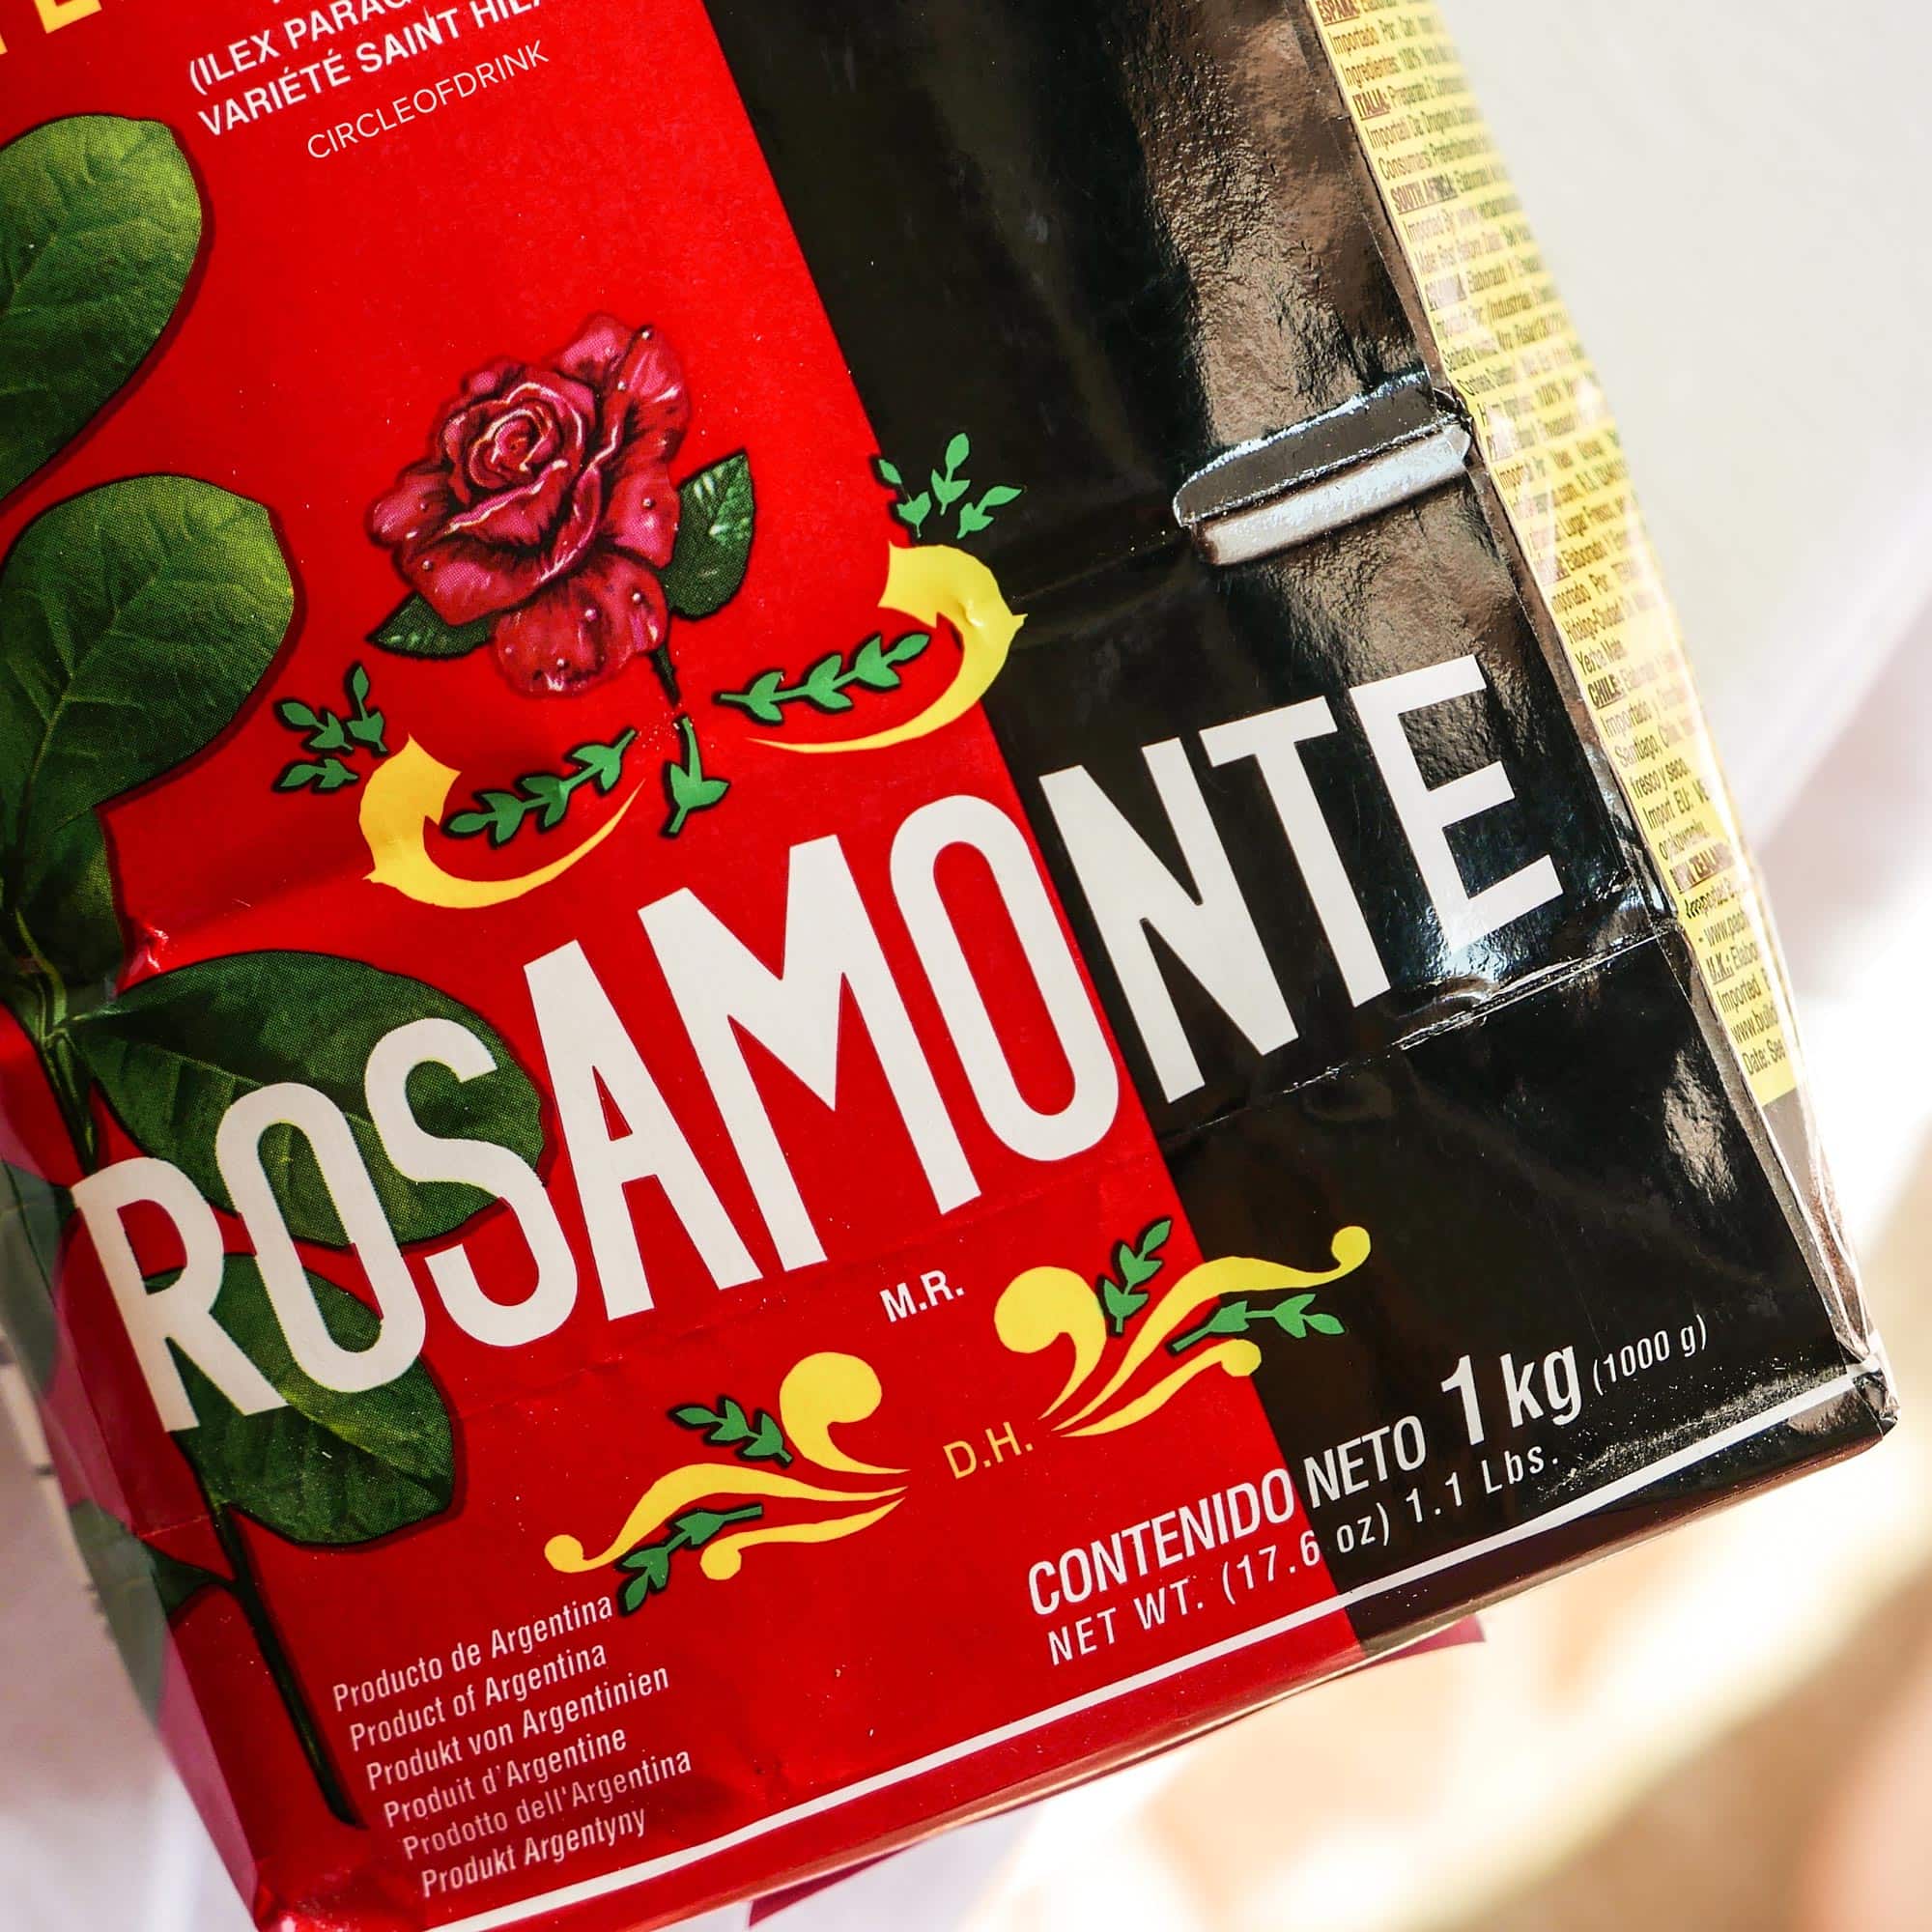 Rosamonte Yerba Mate Traditional - 55 Aniversario (1 kg / 2.2 lb)